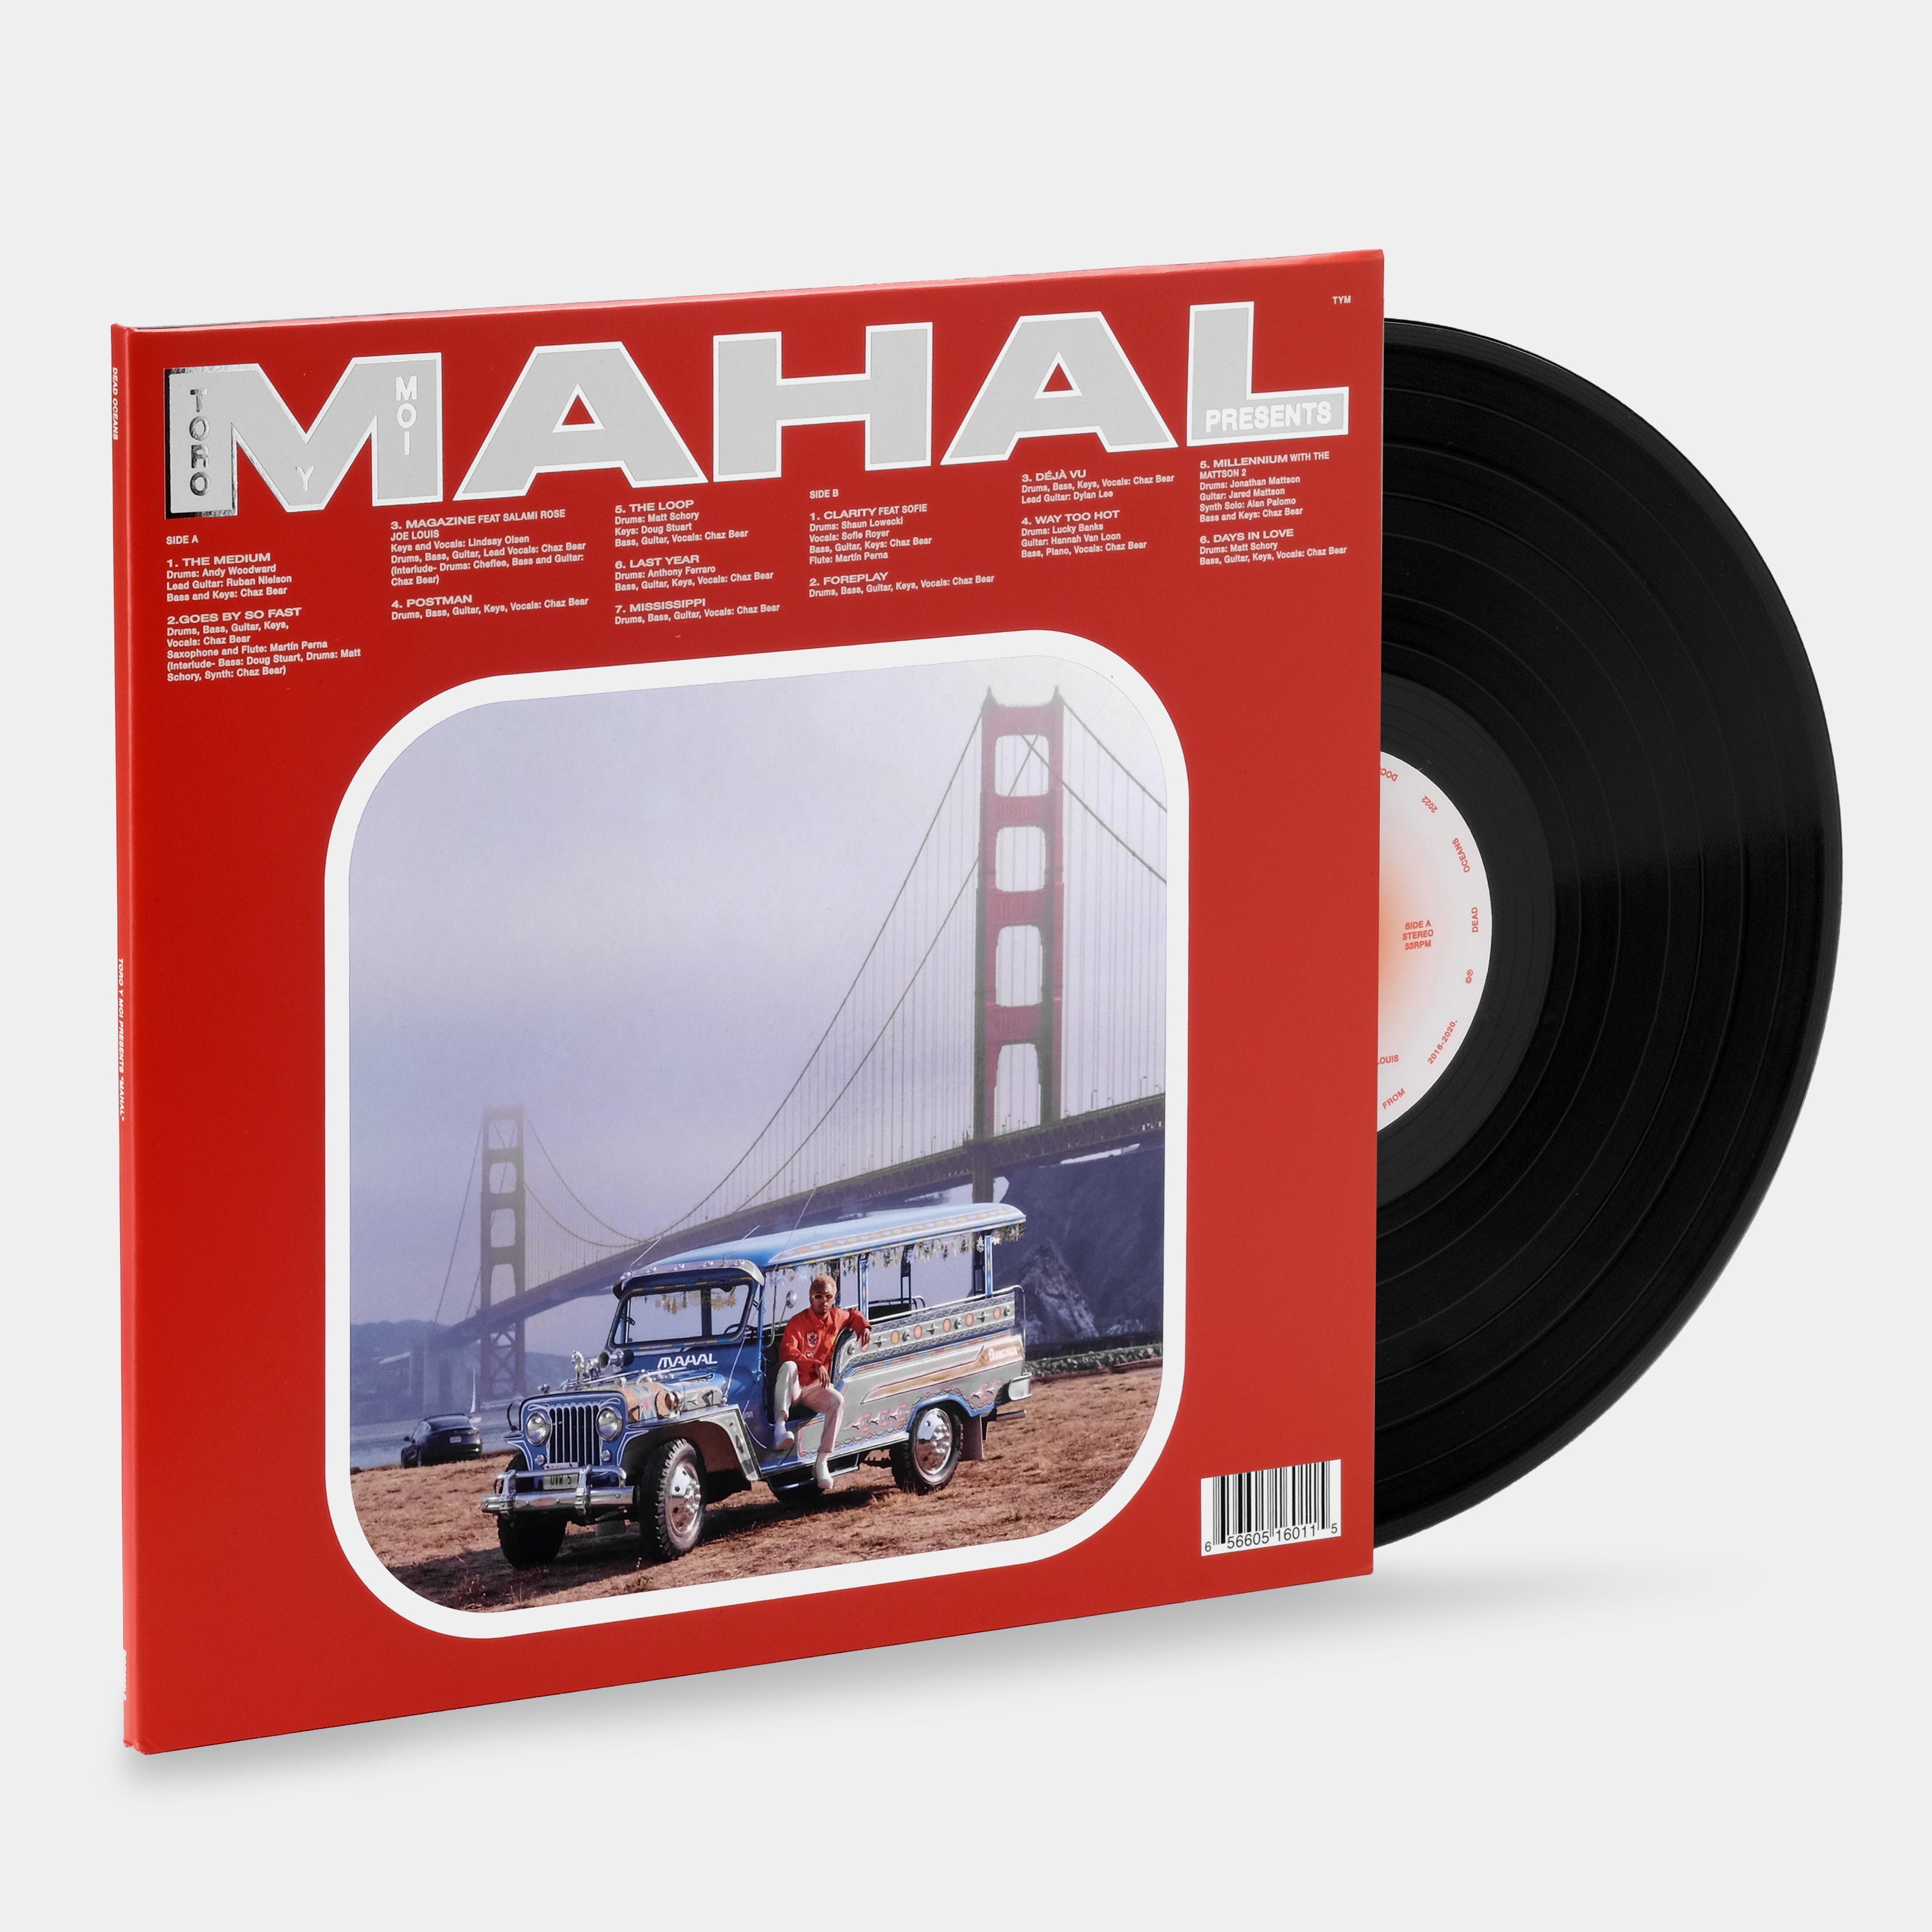 Toro Y Moi - Mahal LP Vinyl Record